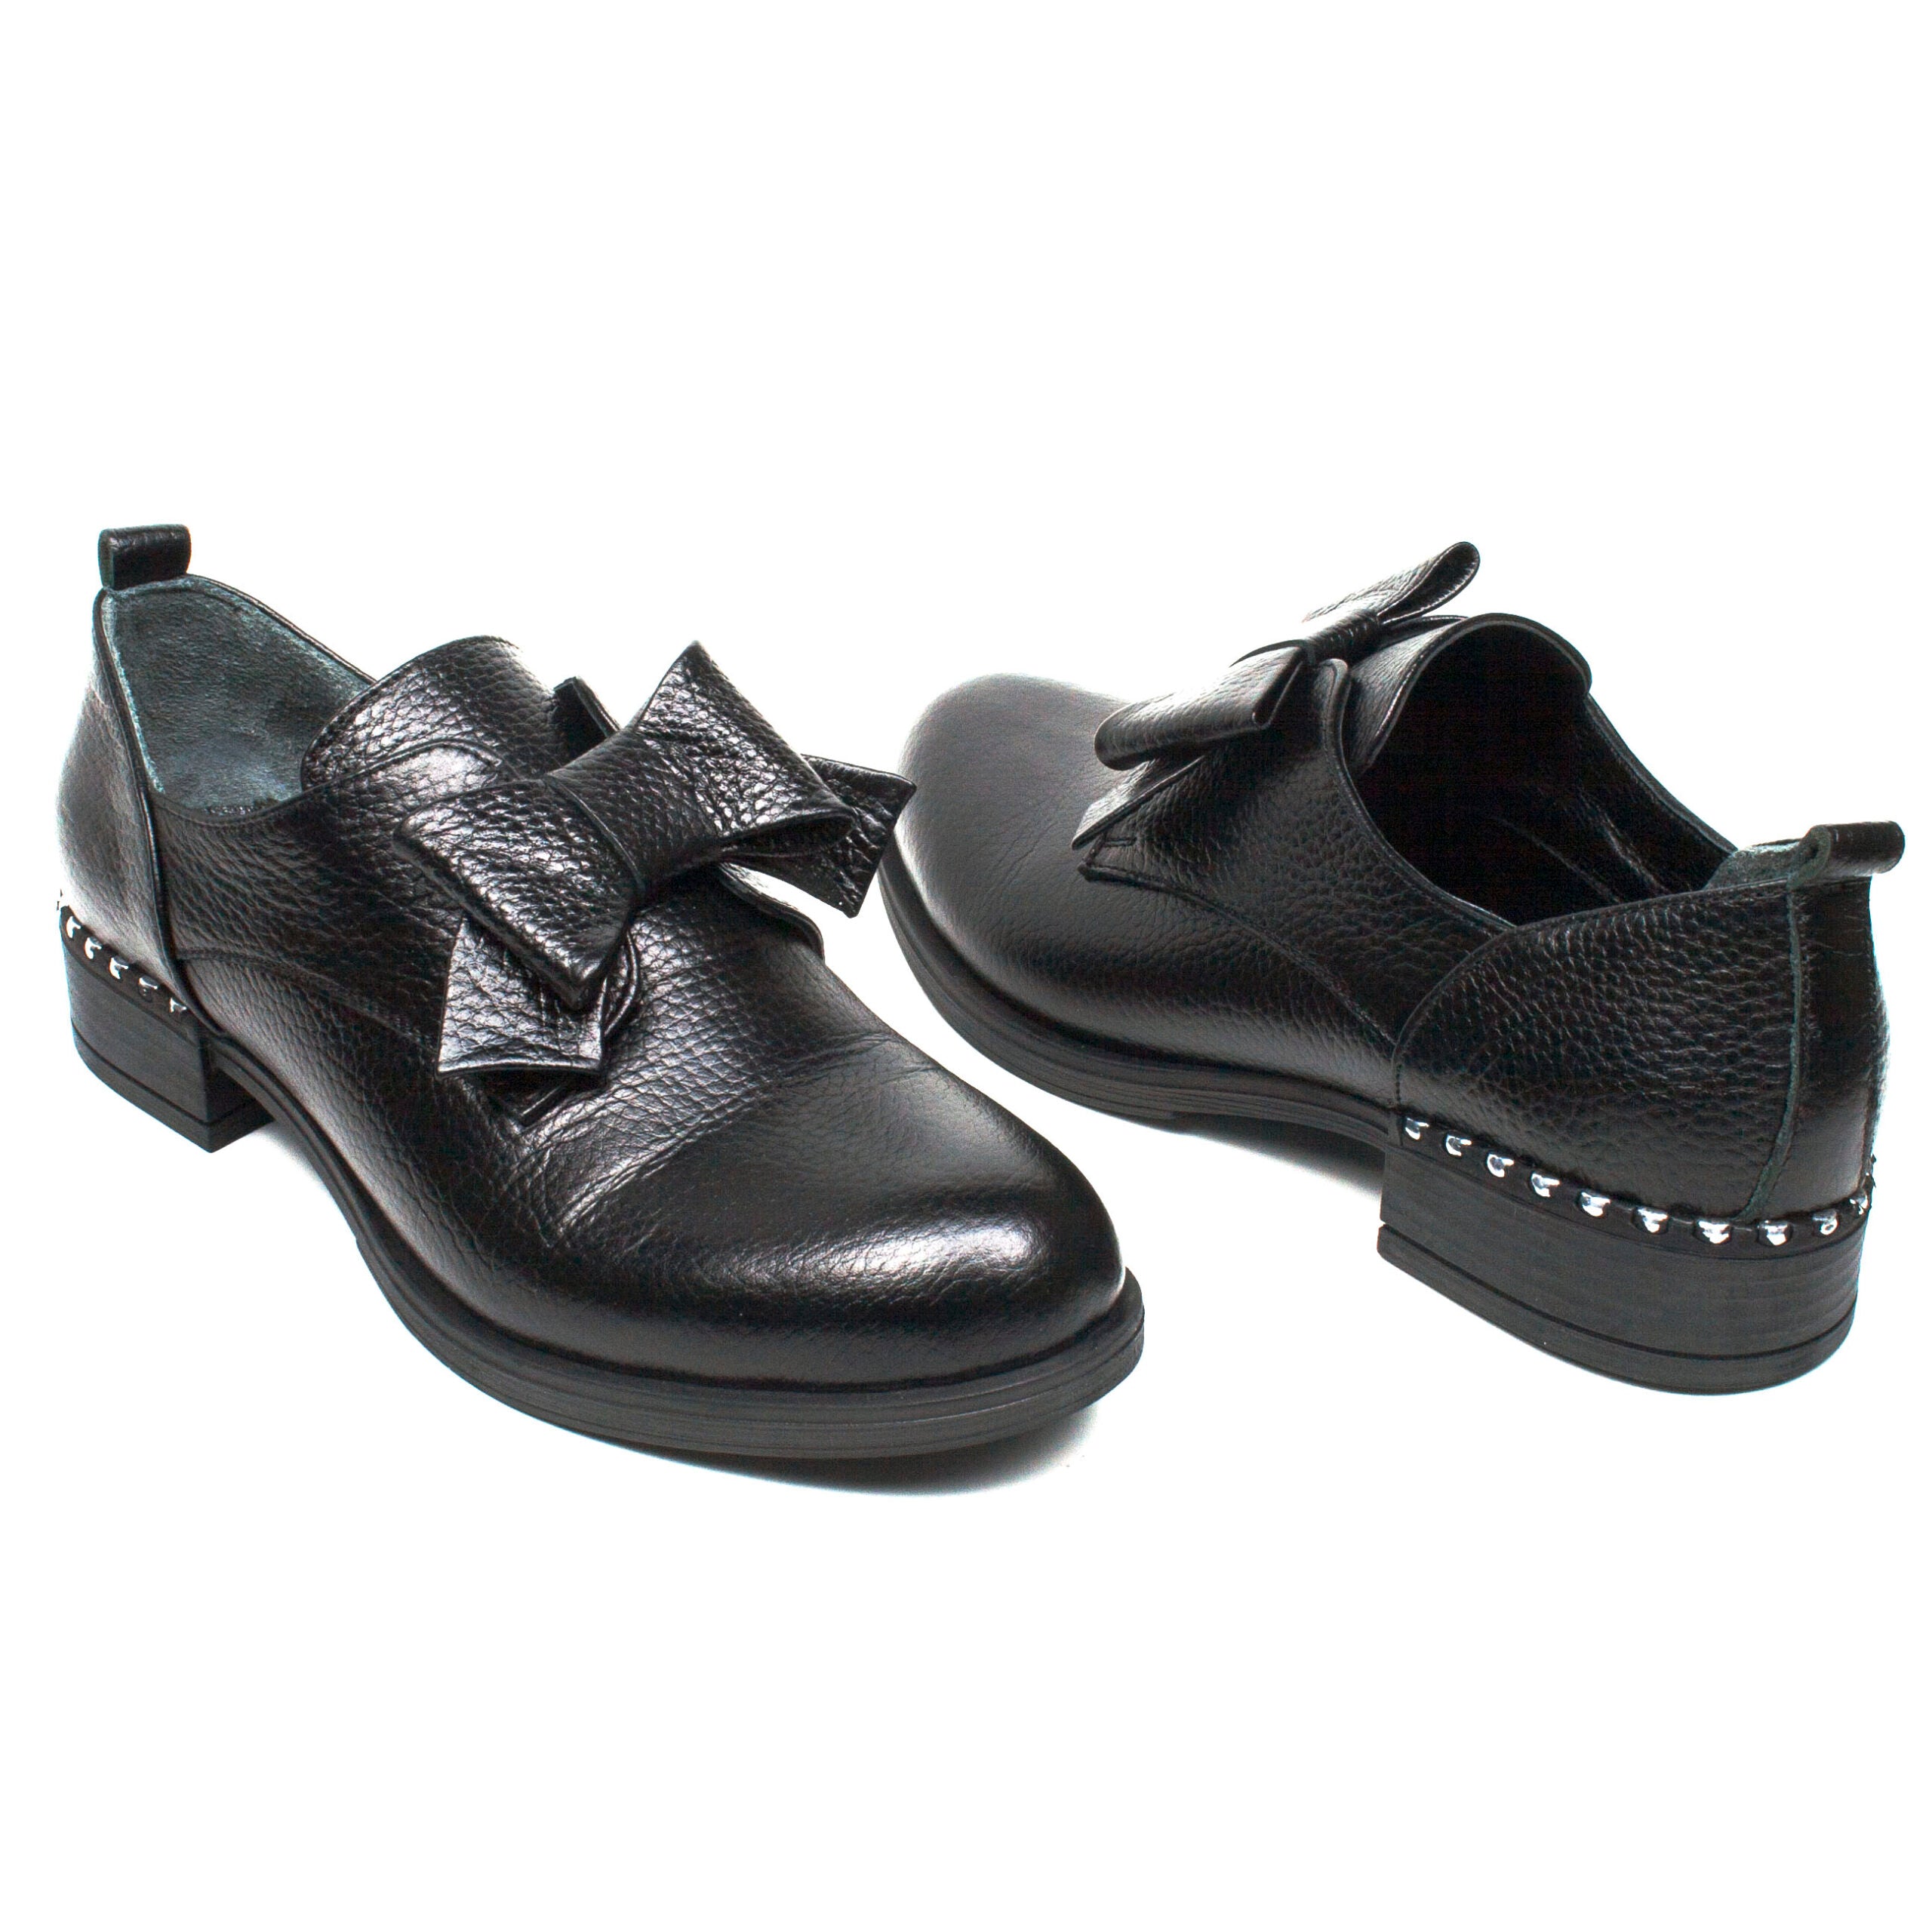 Manos pantofi dama negru ID1772-NG